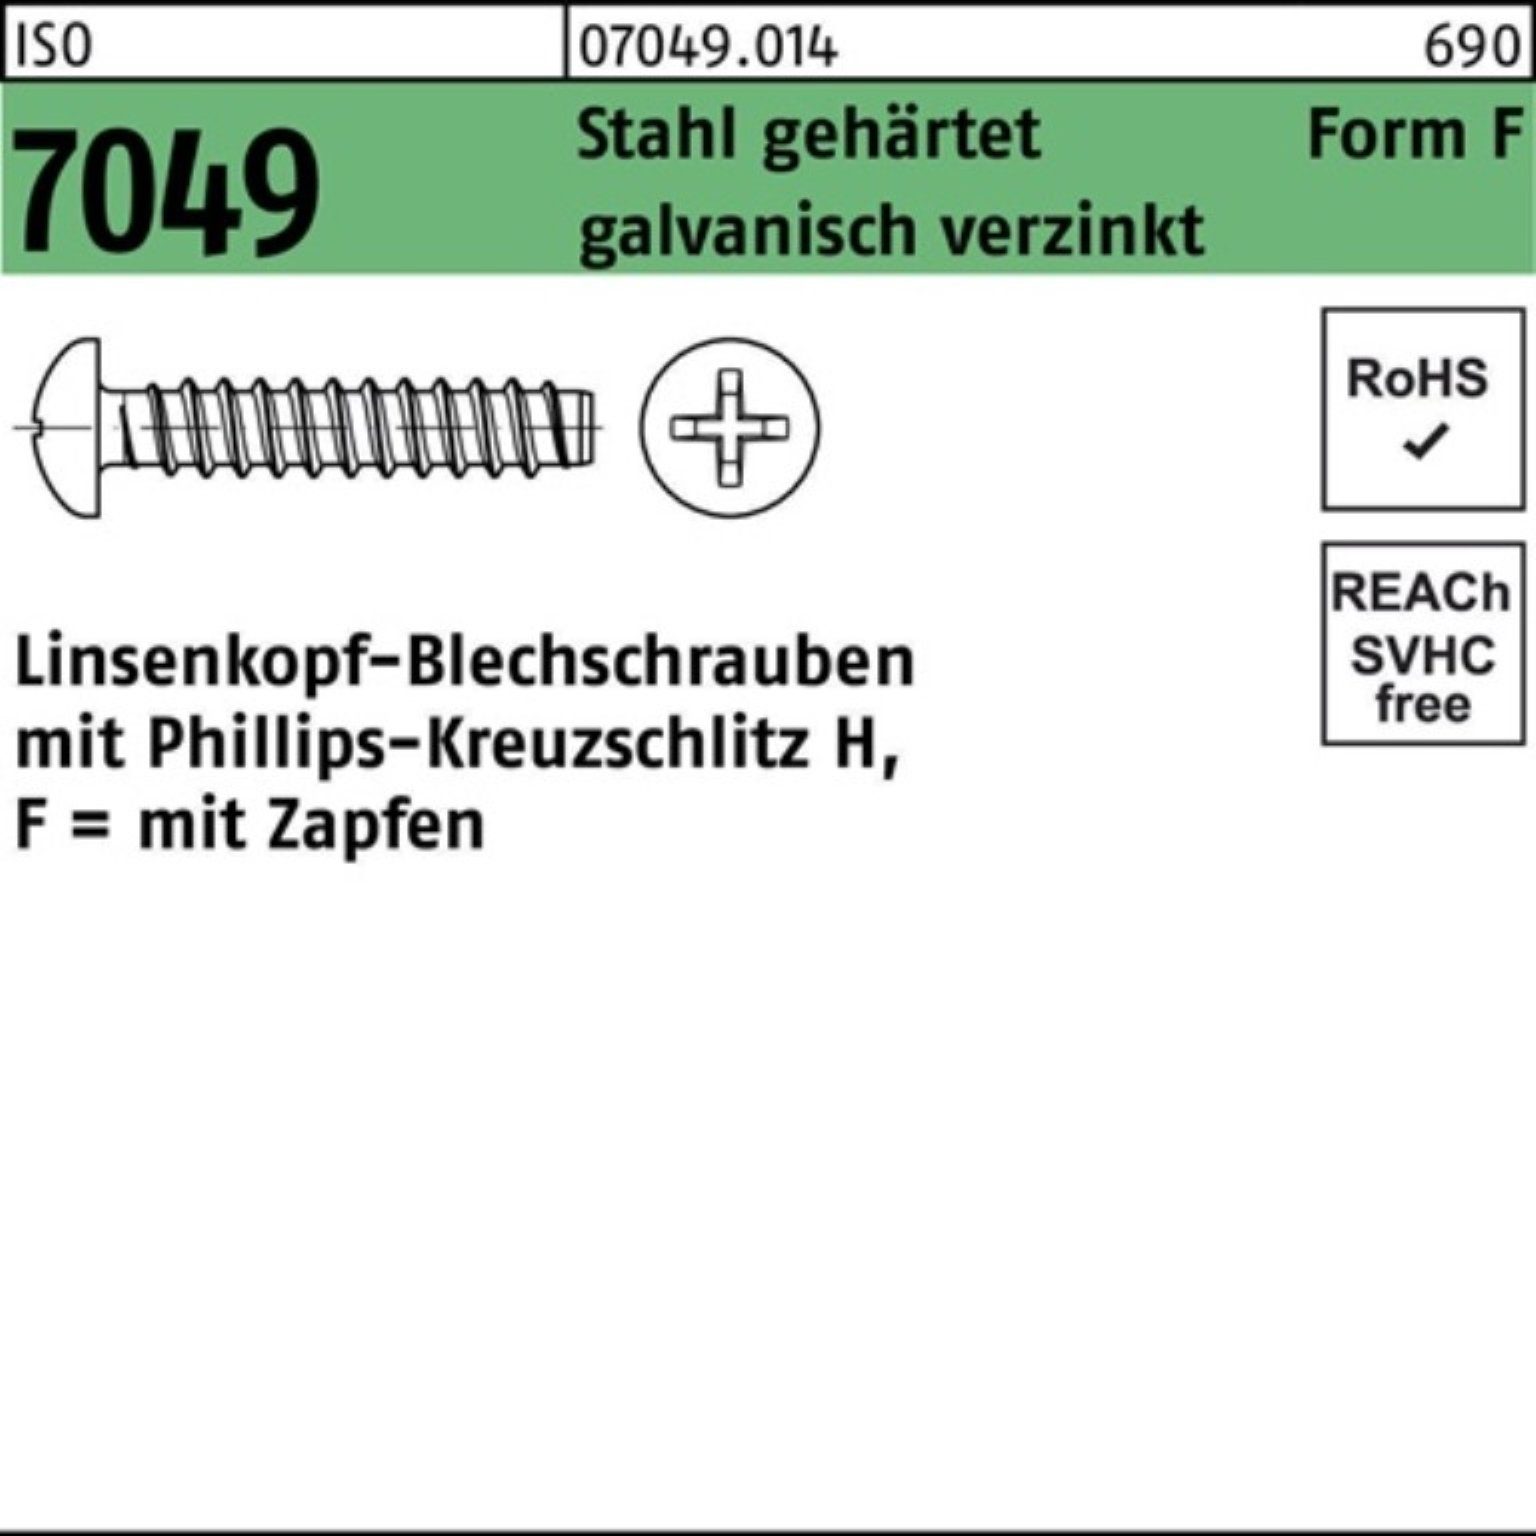 LIKO Blechschraube Reyher geh. 7049 Blechschraube 3,5x13-H Stahl Pack Zapfen/PH F 100er ISO